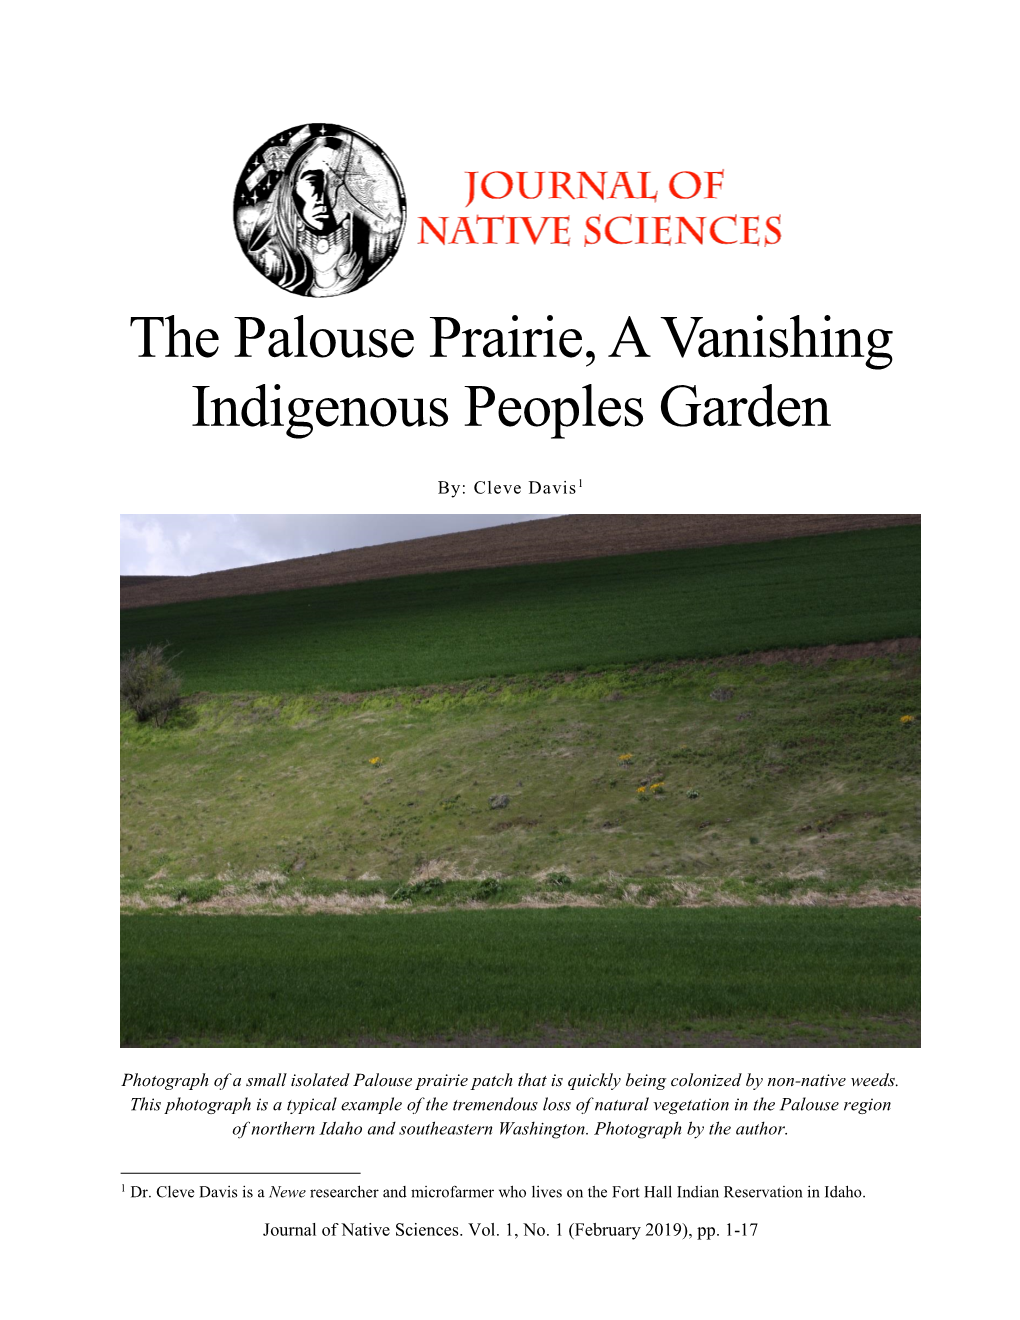 The Palouse Prairie, a Vanishing Indigenous Peoples Garden